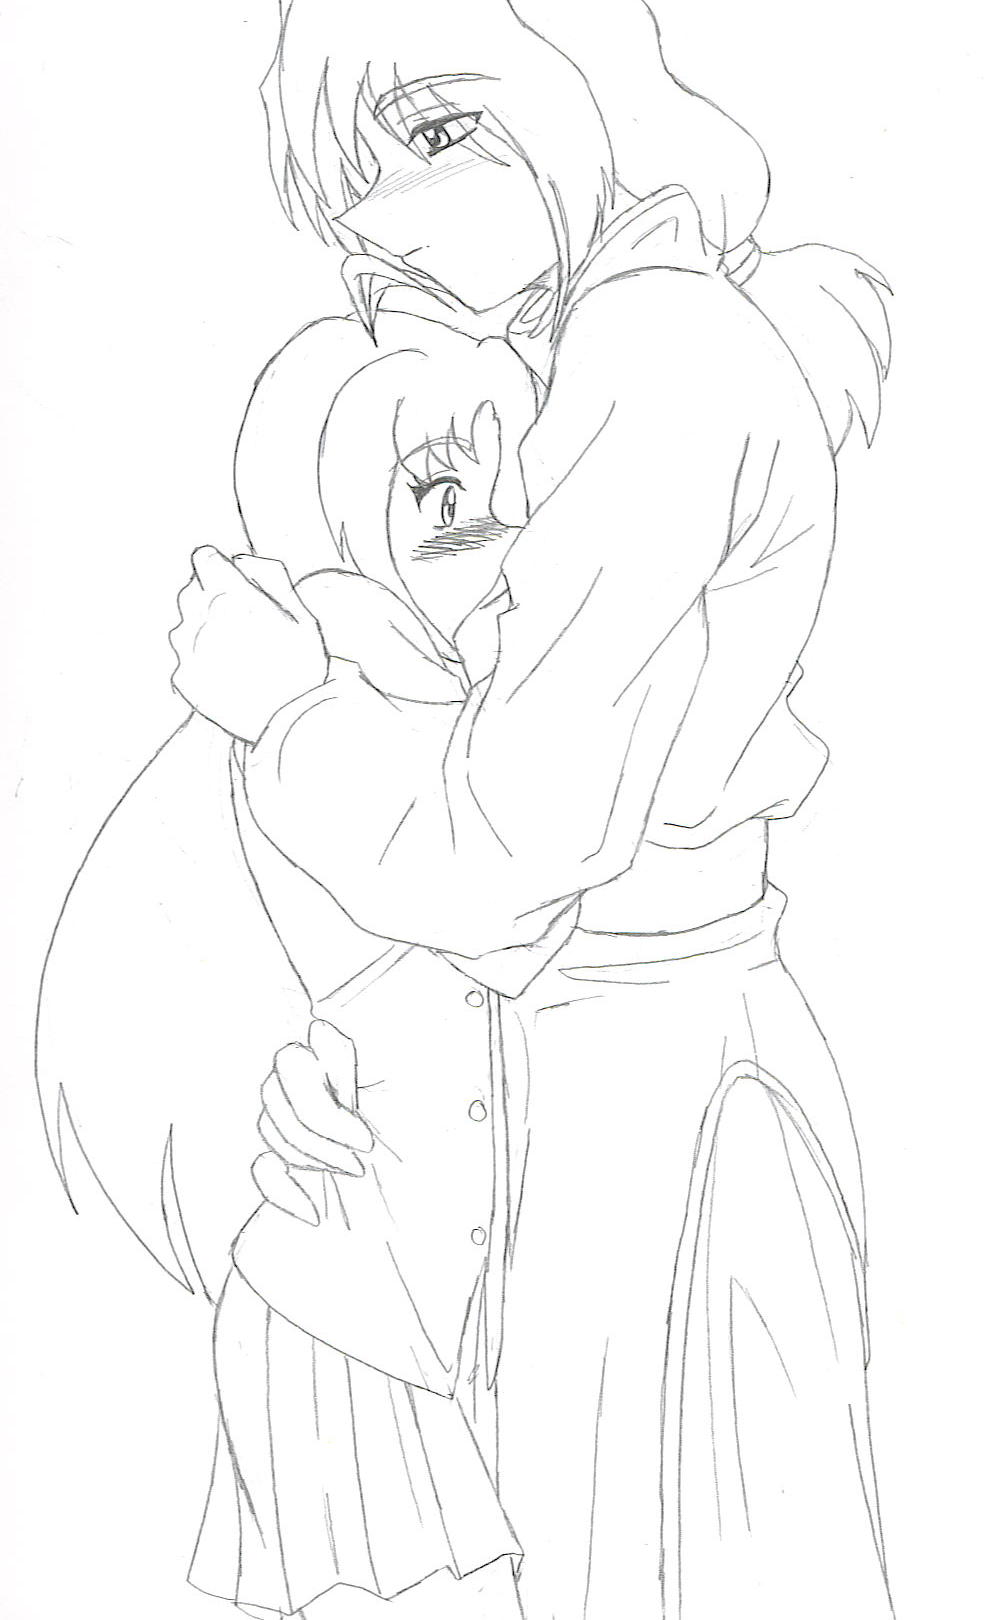 Bain and Kiyera by AnimeMangaLover